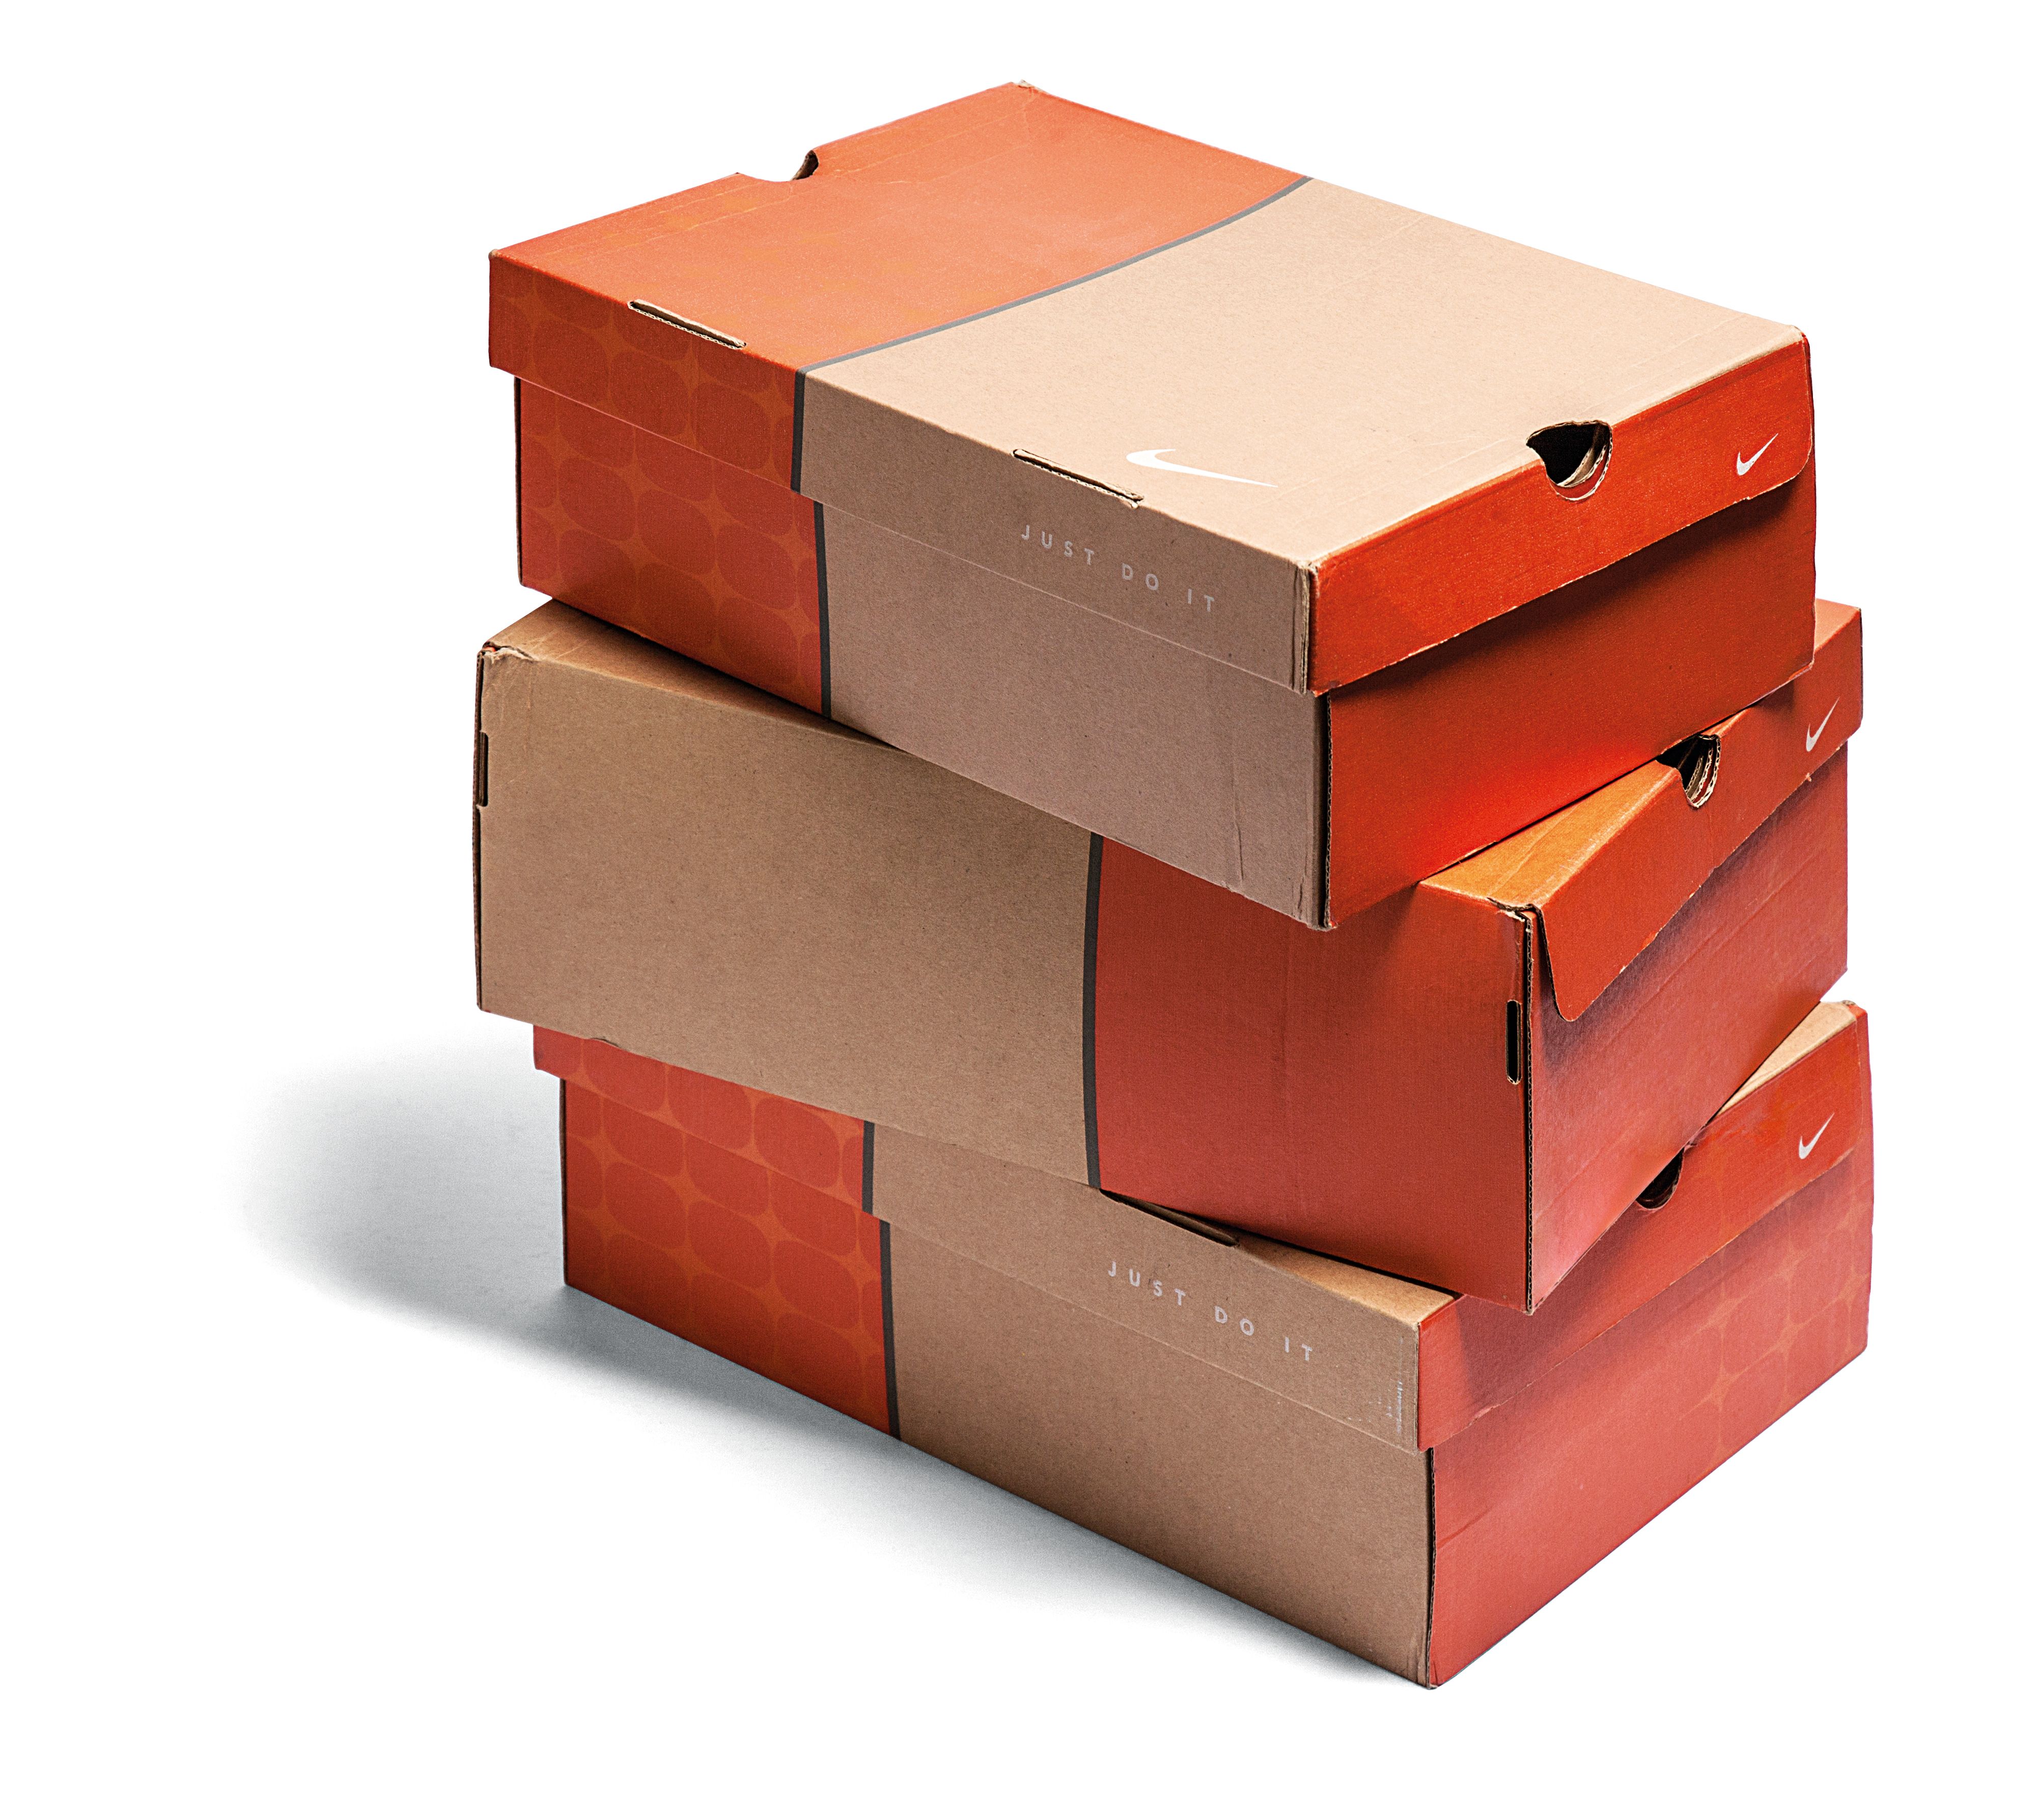 The Orange Box (March 2002 – December 2002)